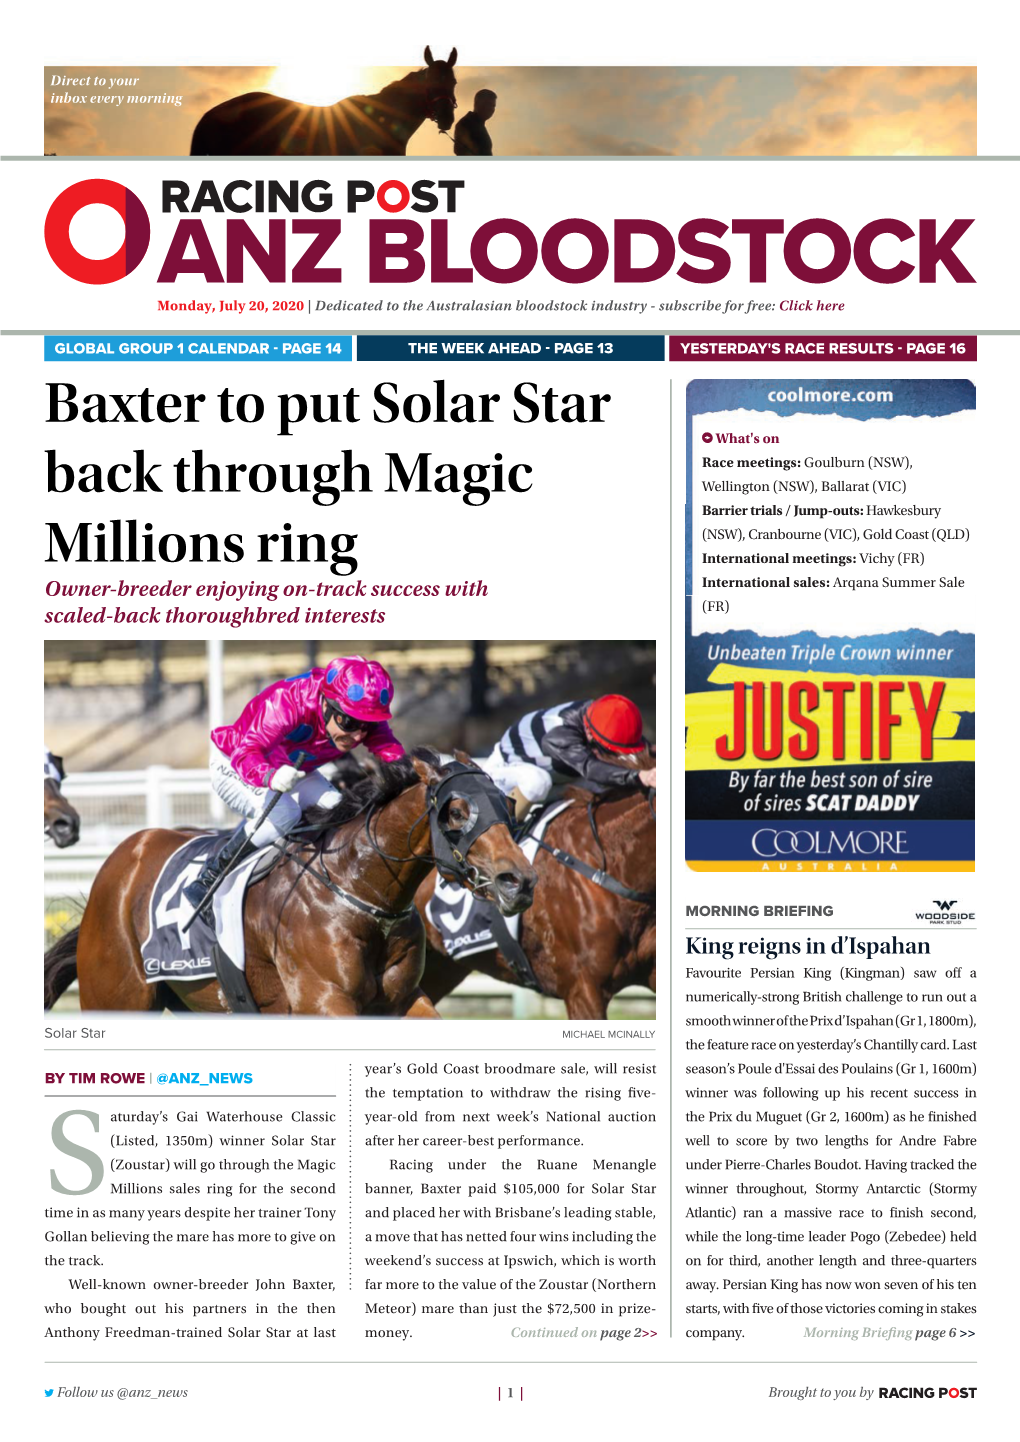 Baxter to Put Solar Star Back Through Magic Millions Ring | 2 | Monday, July 20, 2020